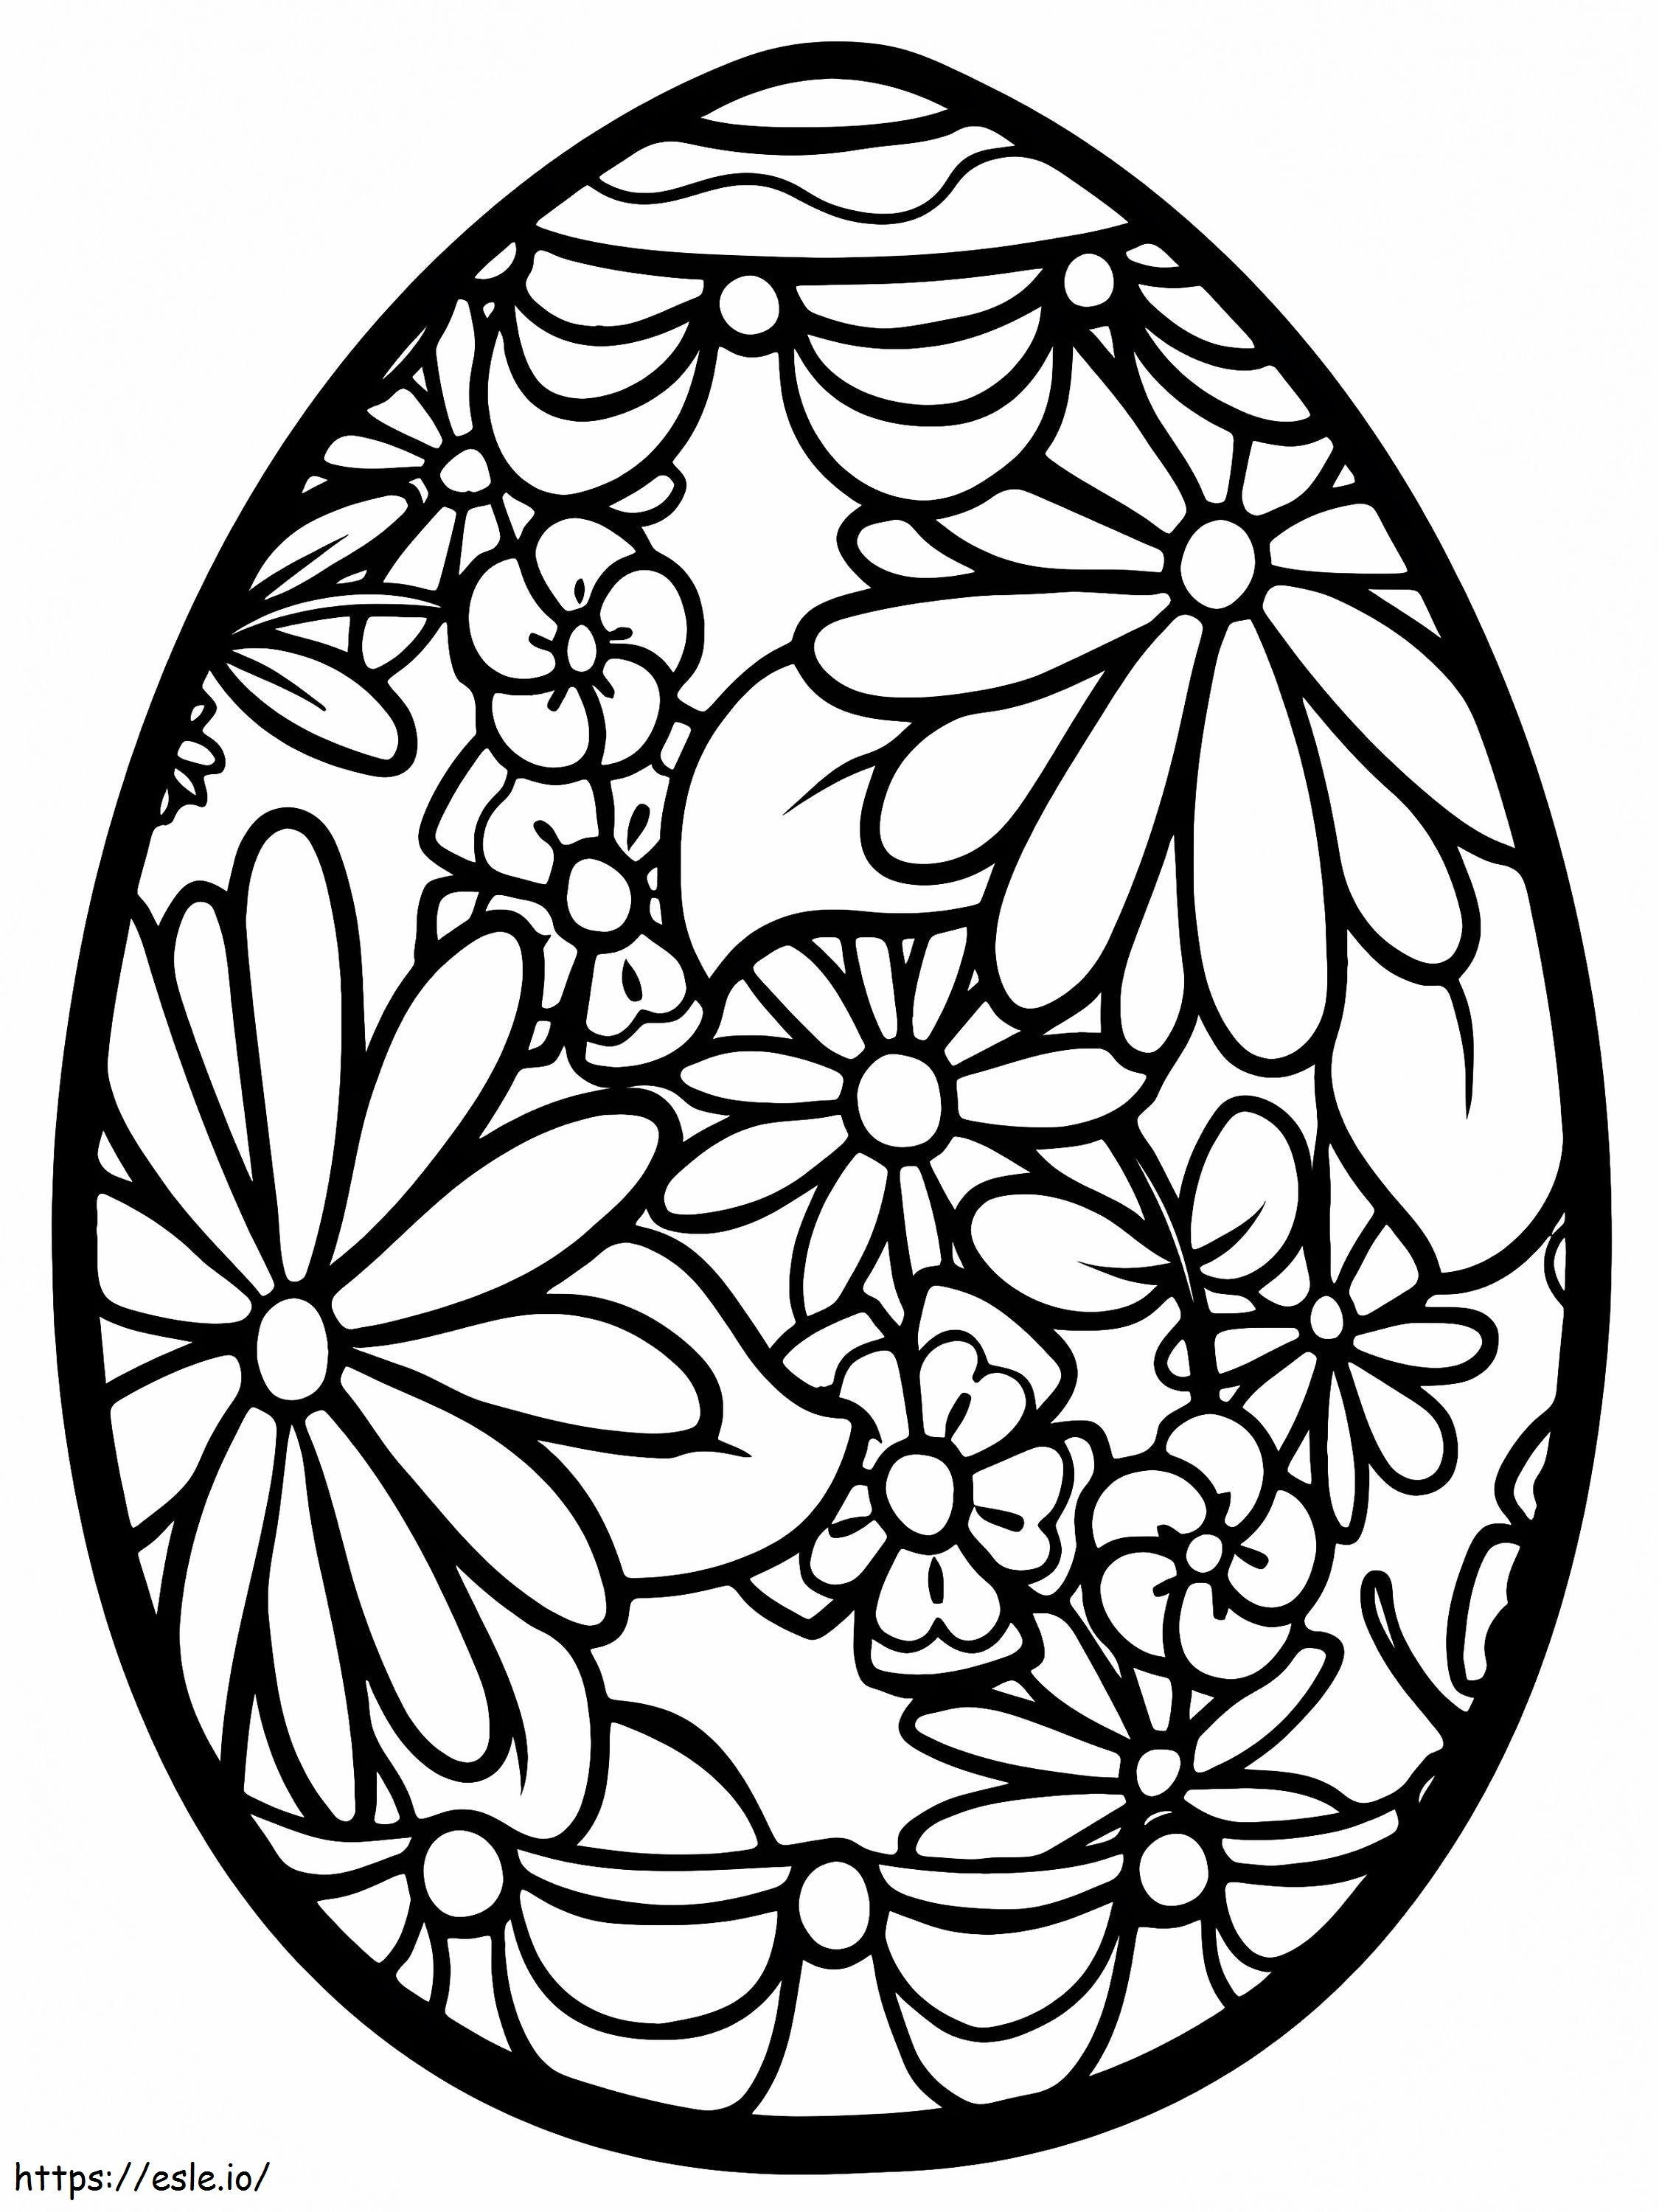 Patrón floral de huevos de Pascua para colorear